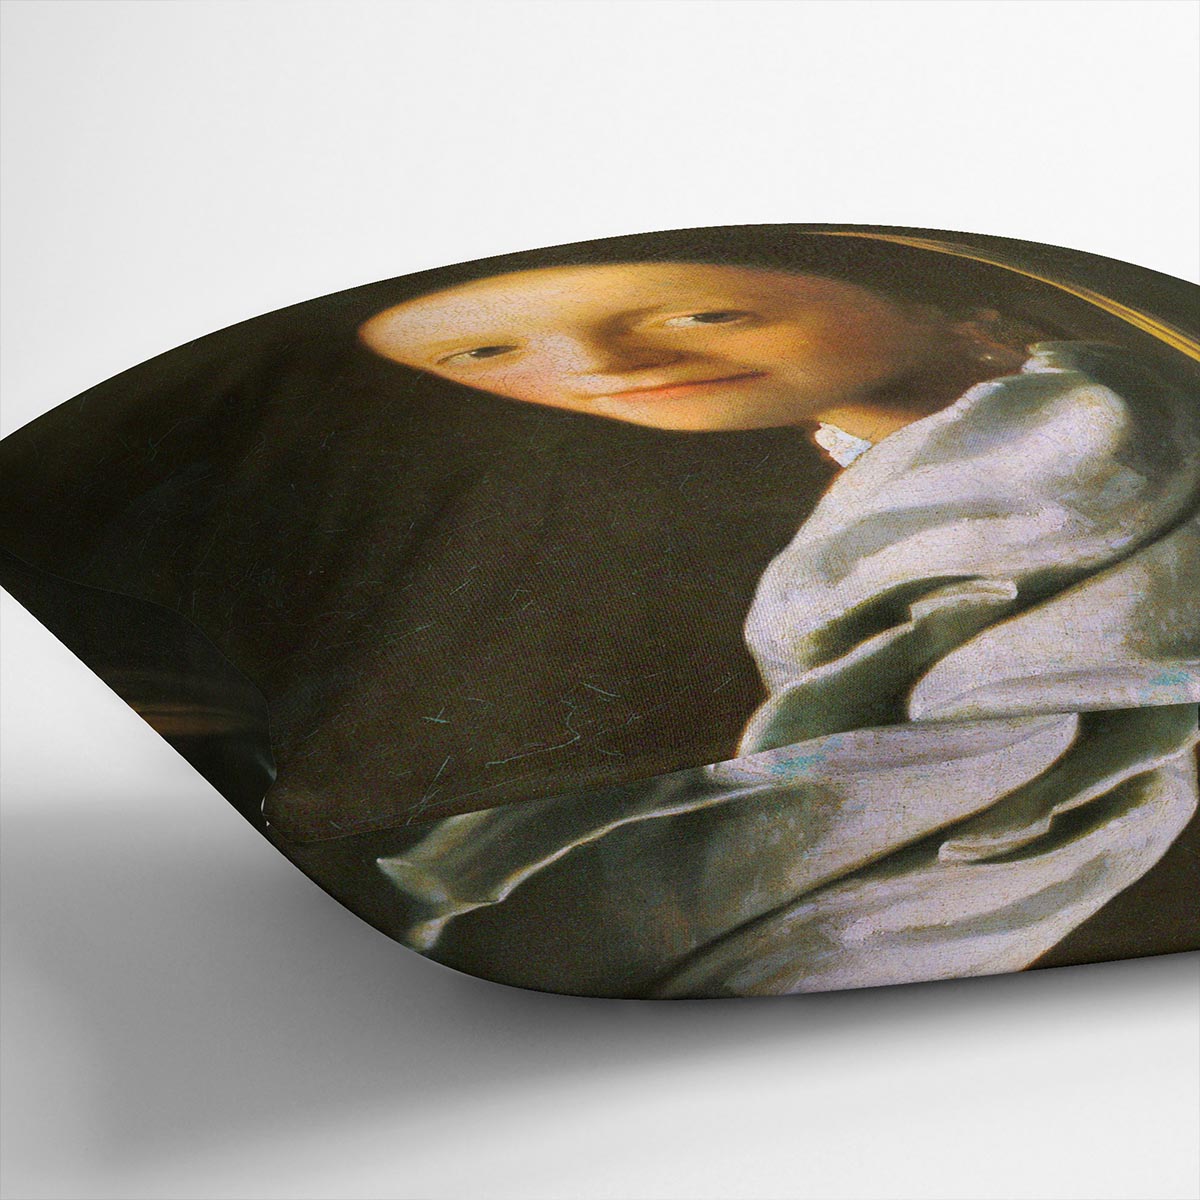 Maid by Vermeer Cushion